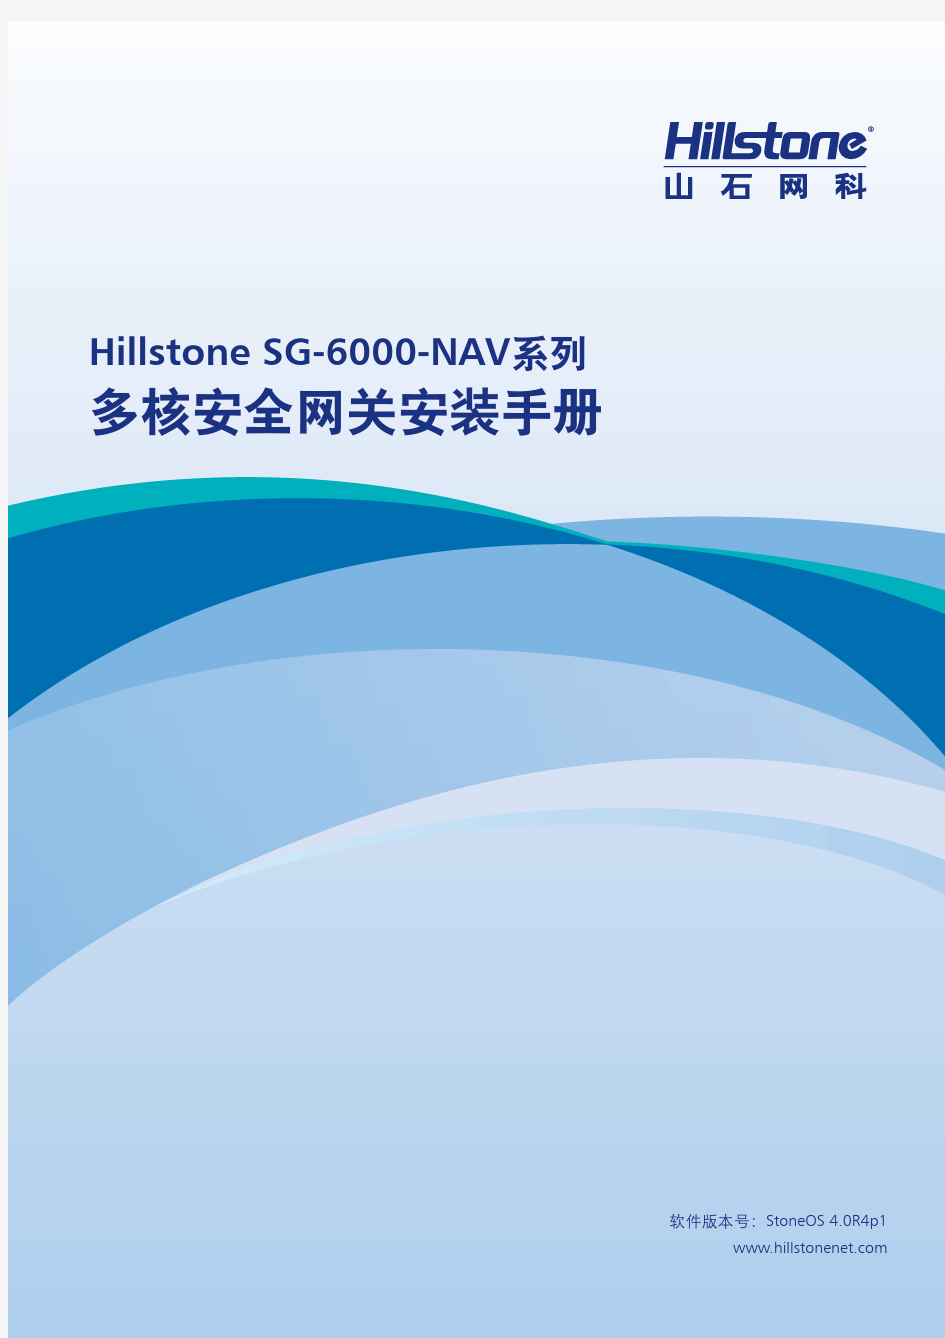 Hillstone SG-6000-NAV多核安全网关安装手册_4.0R4p1